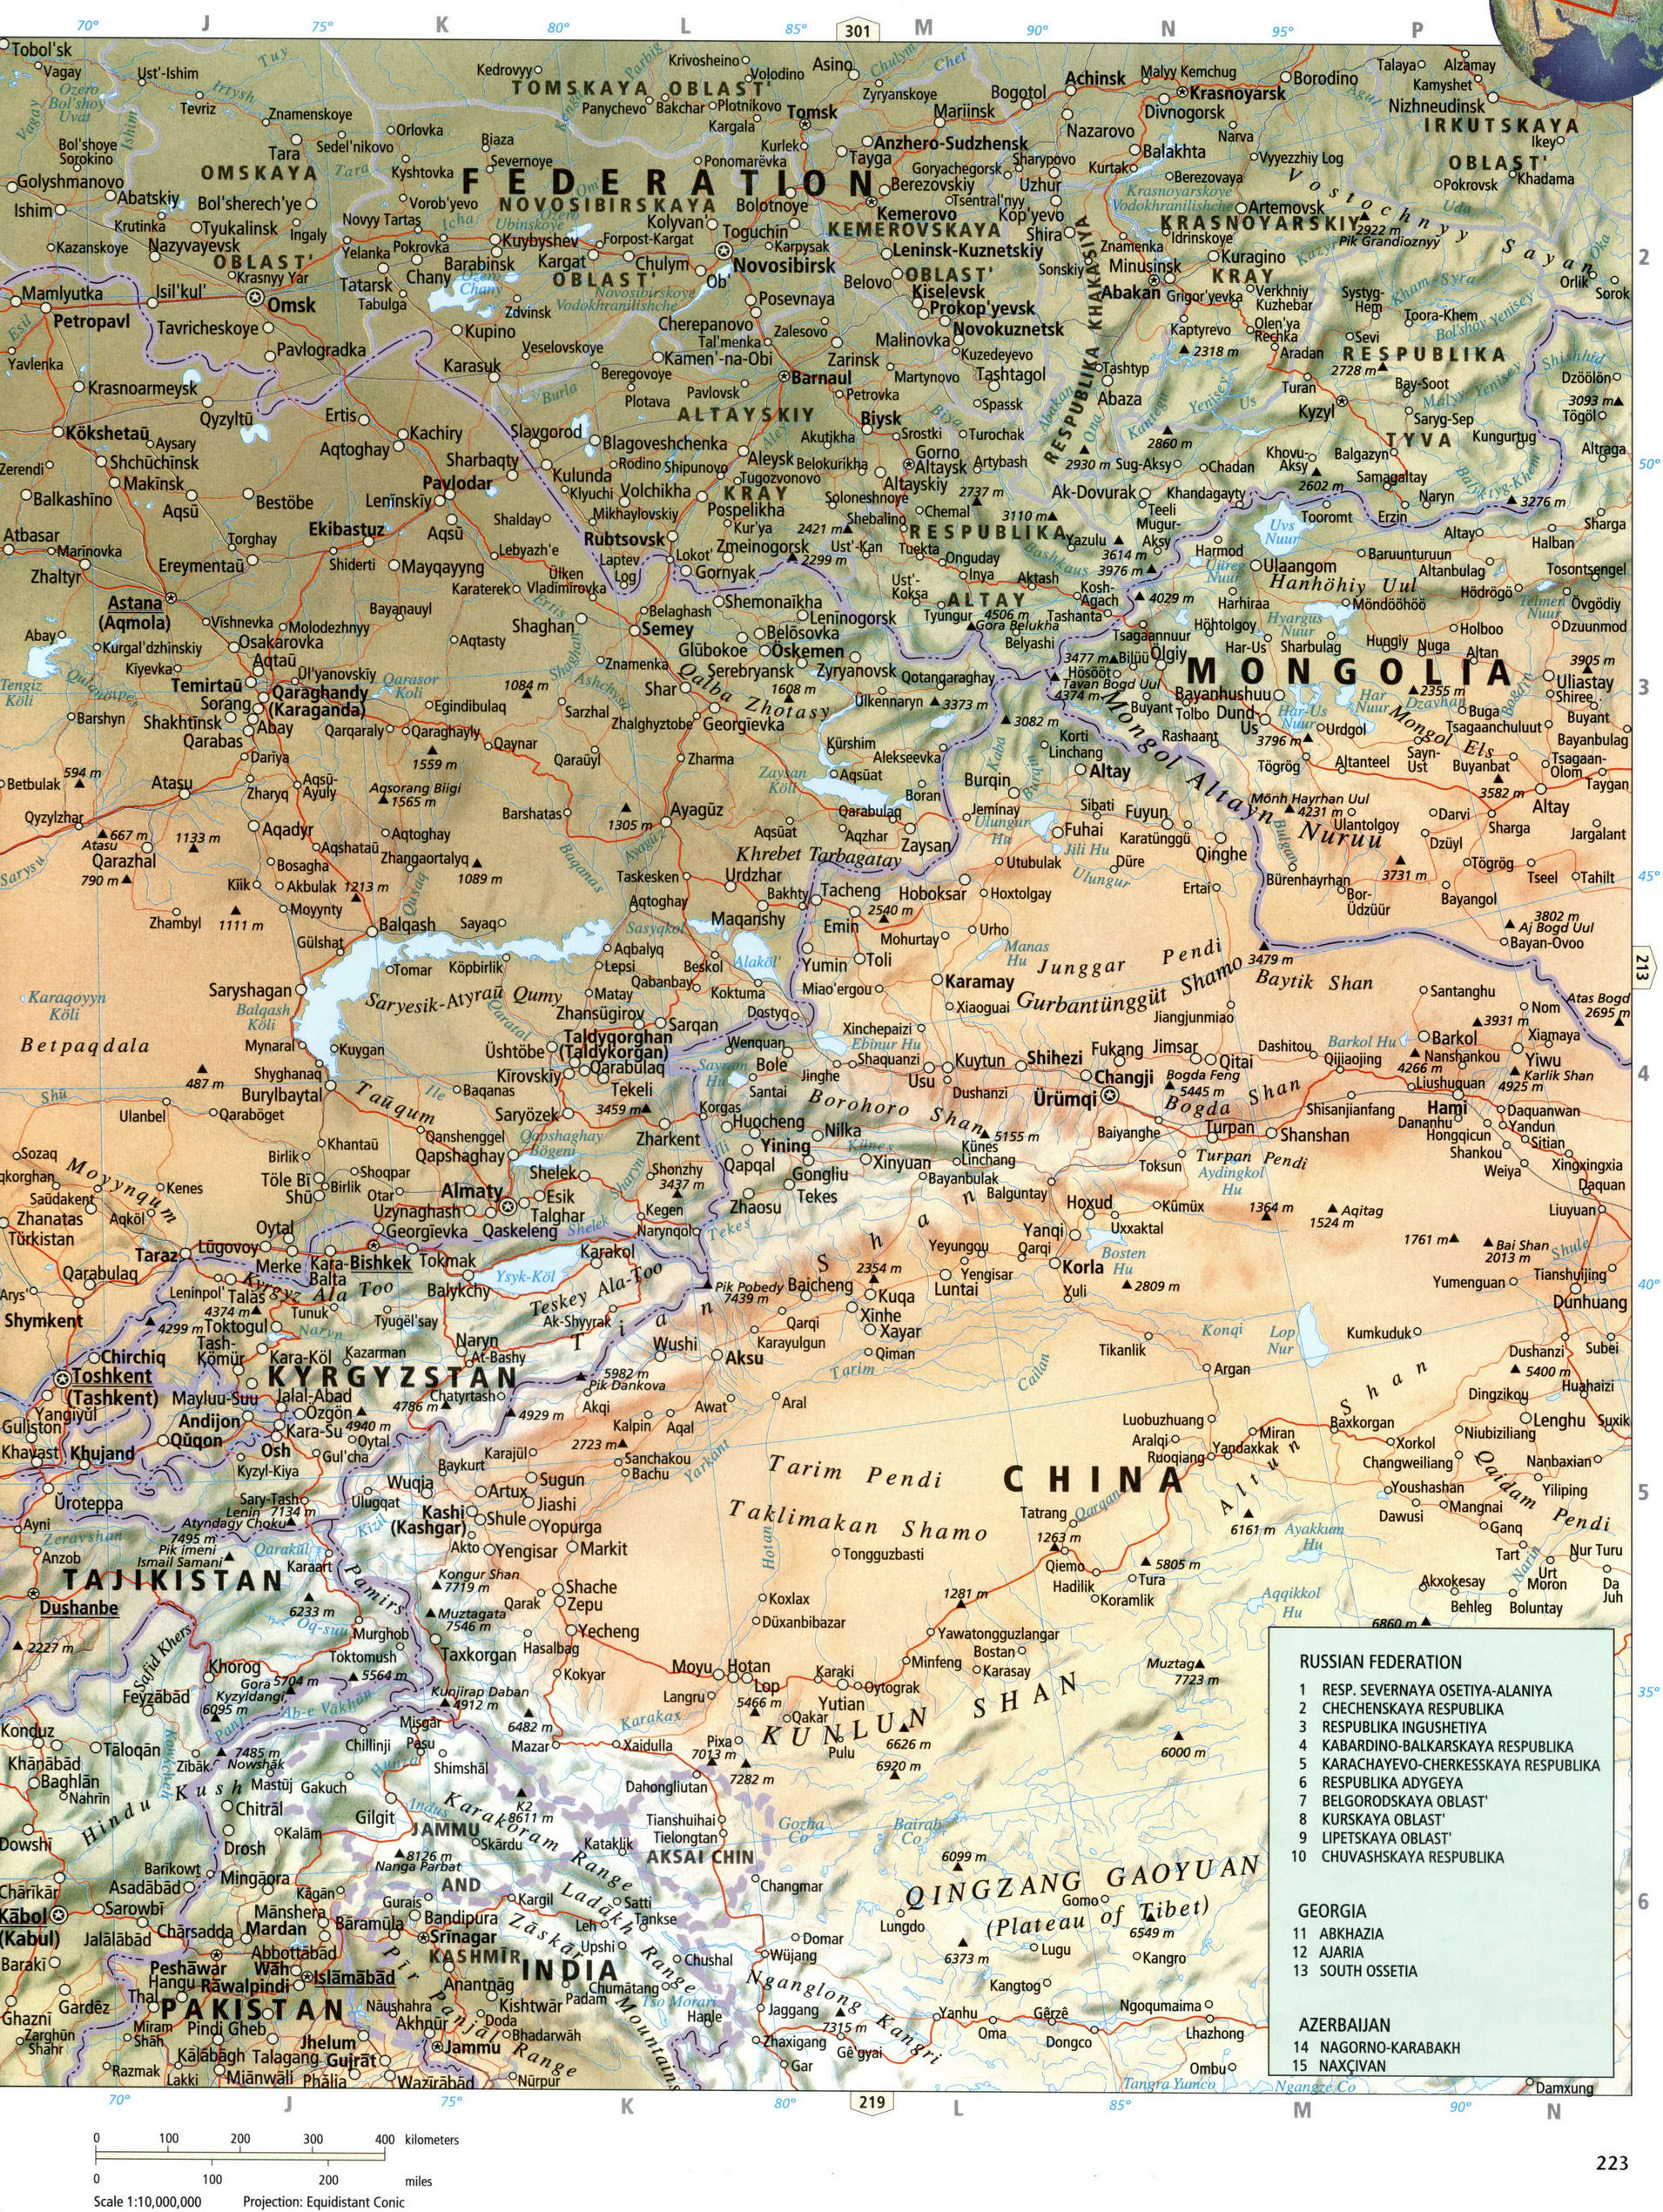 Kyrgyzstan, Tajikistan map